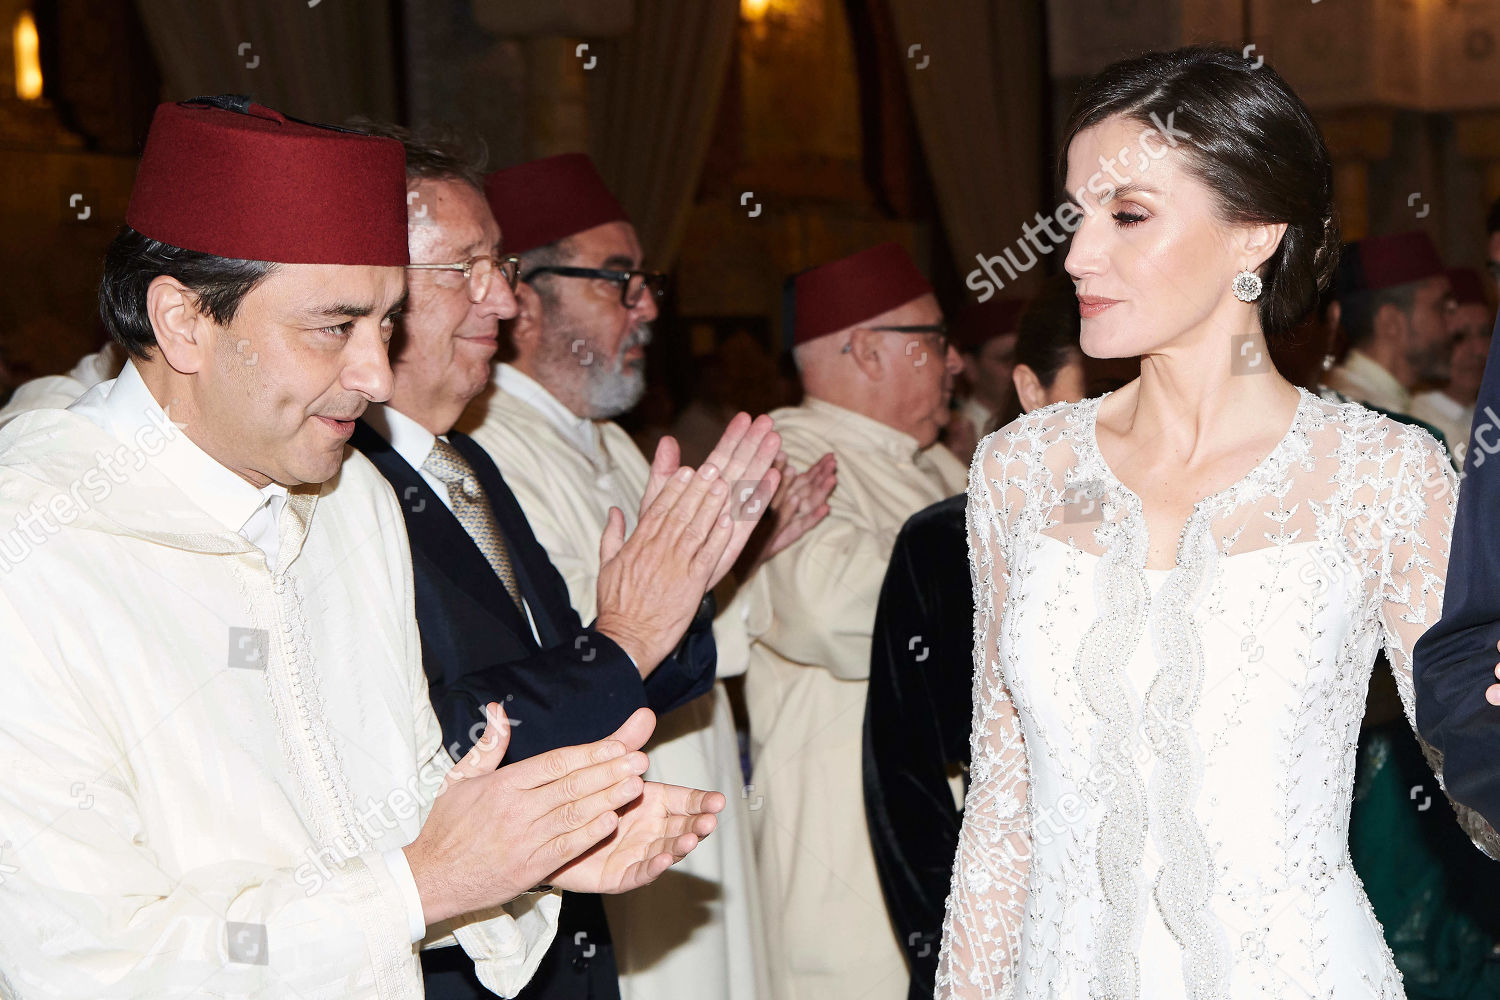 spanish-royals-visit-morocco-rabat-morocco-shutterstock-editorial-10104332w.jpg